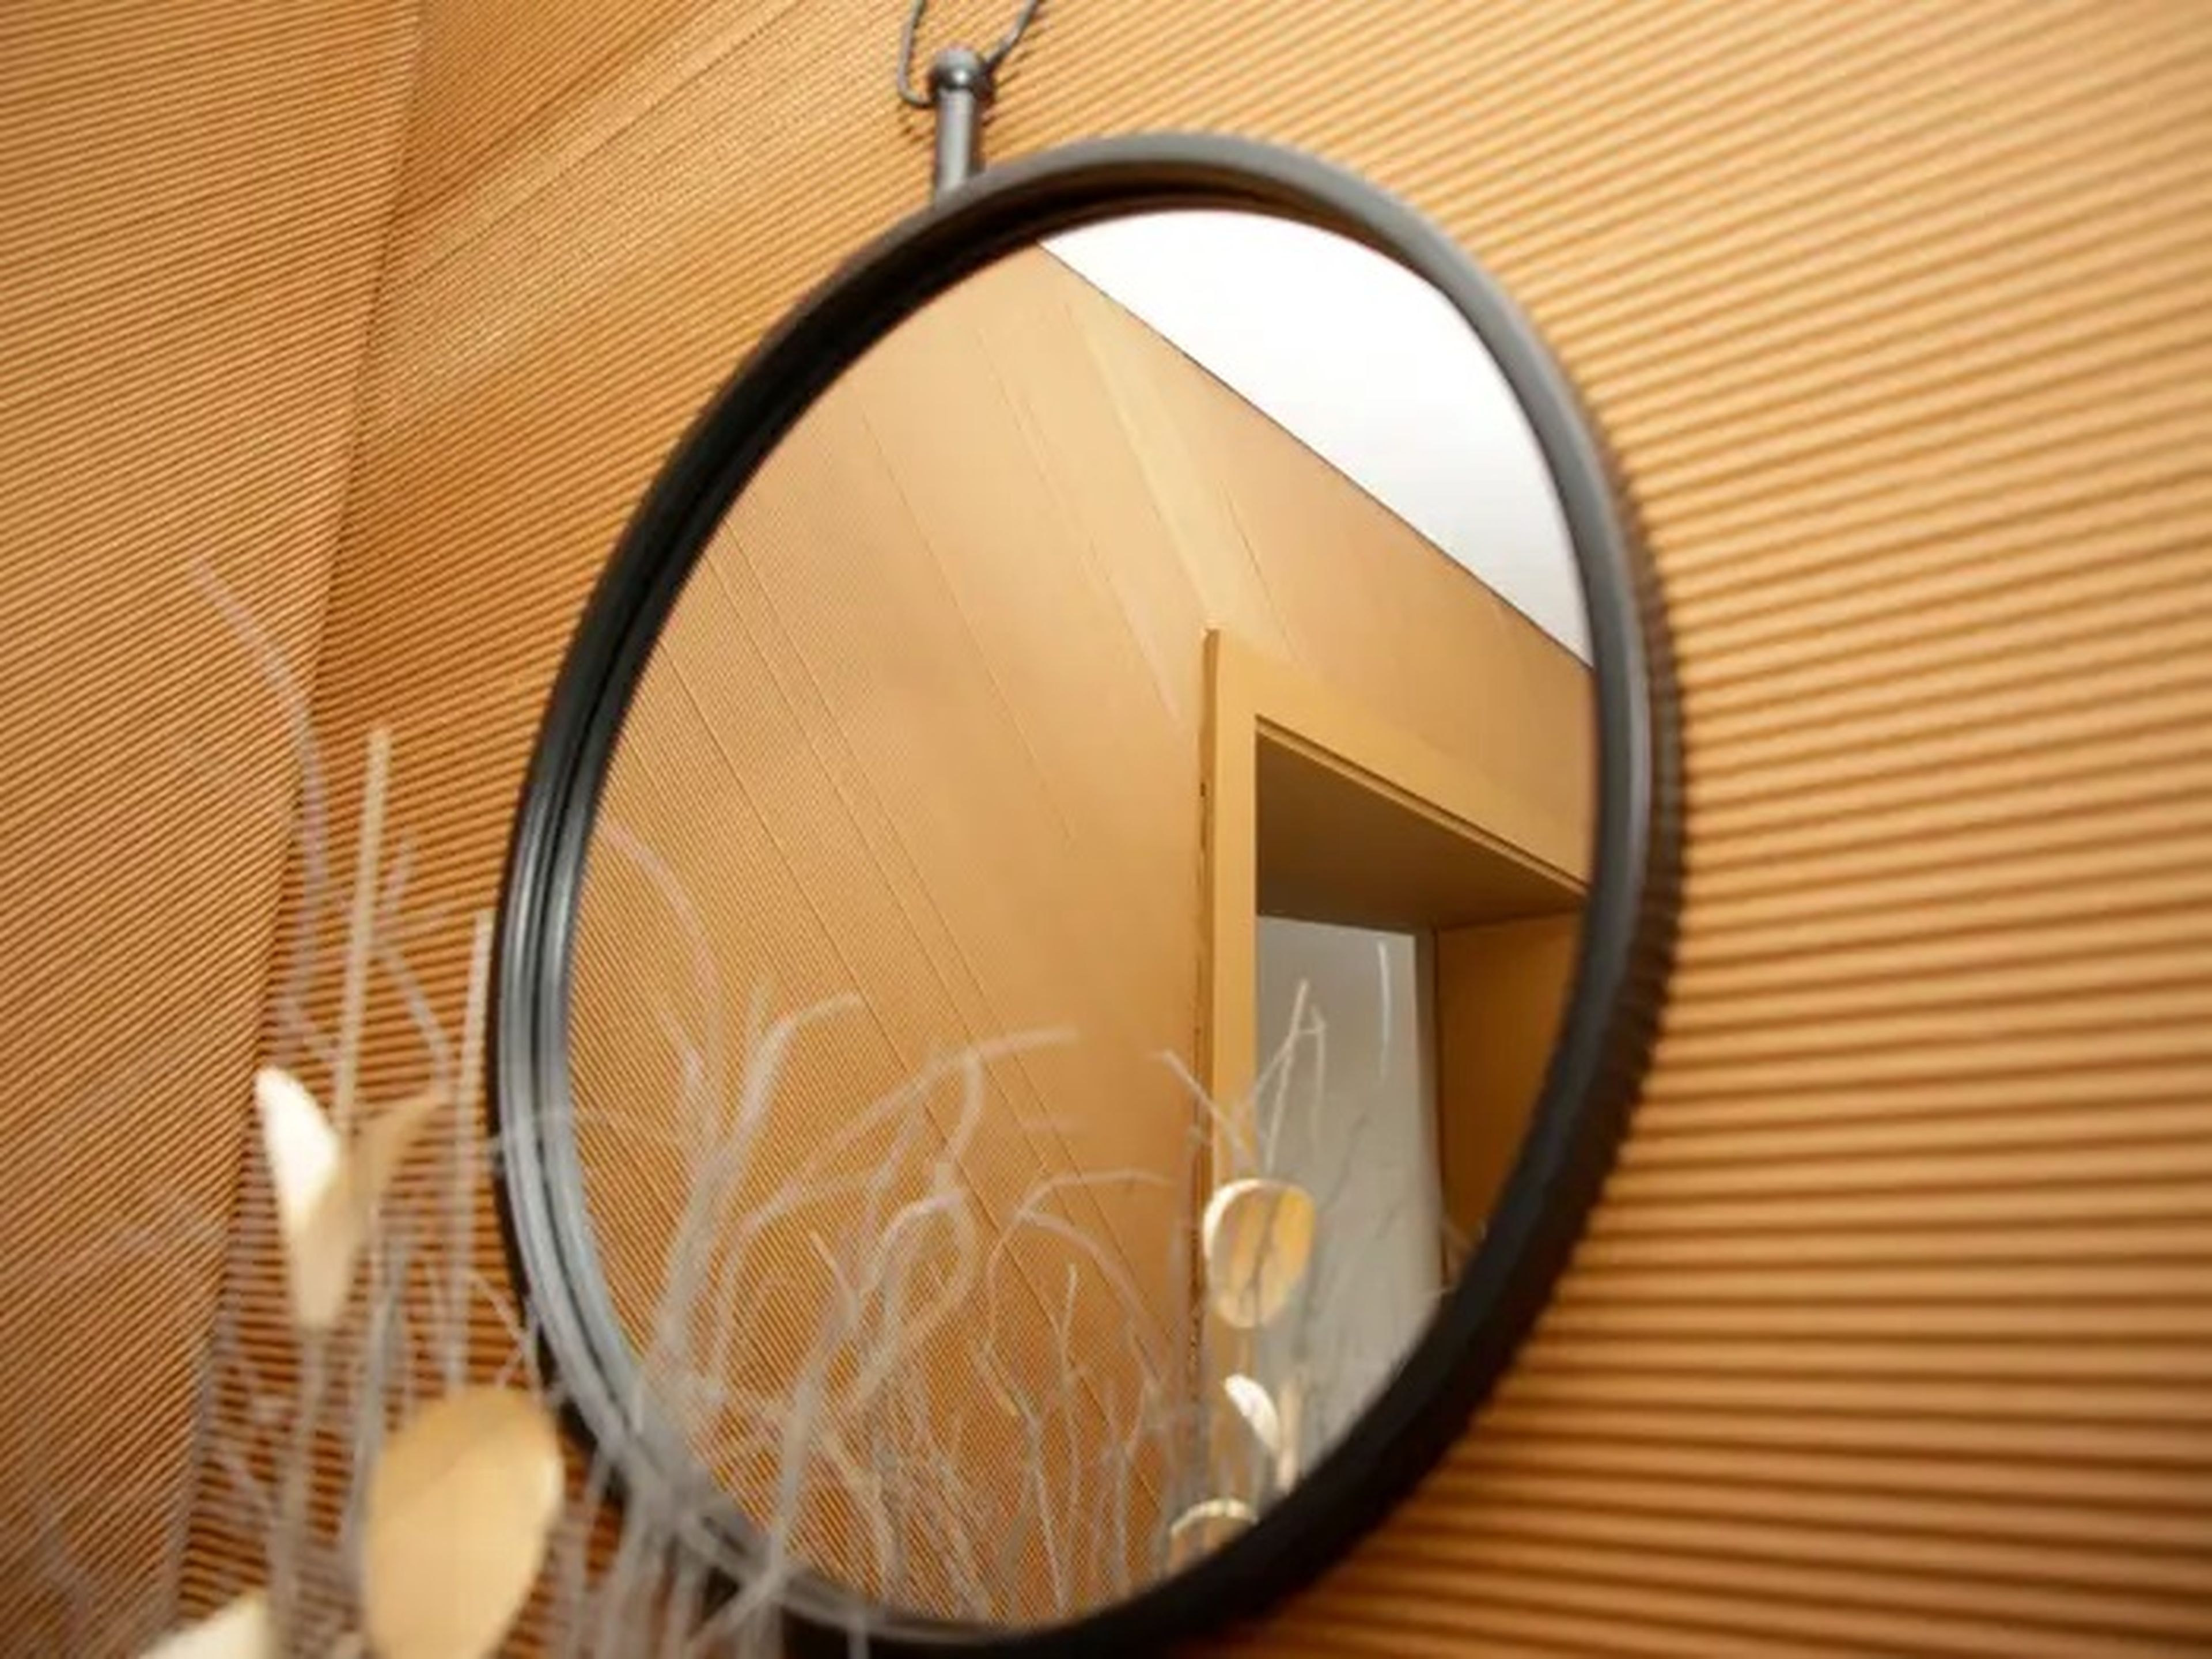 Un espejo en la vivienda en 3D.